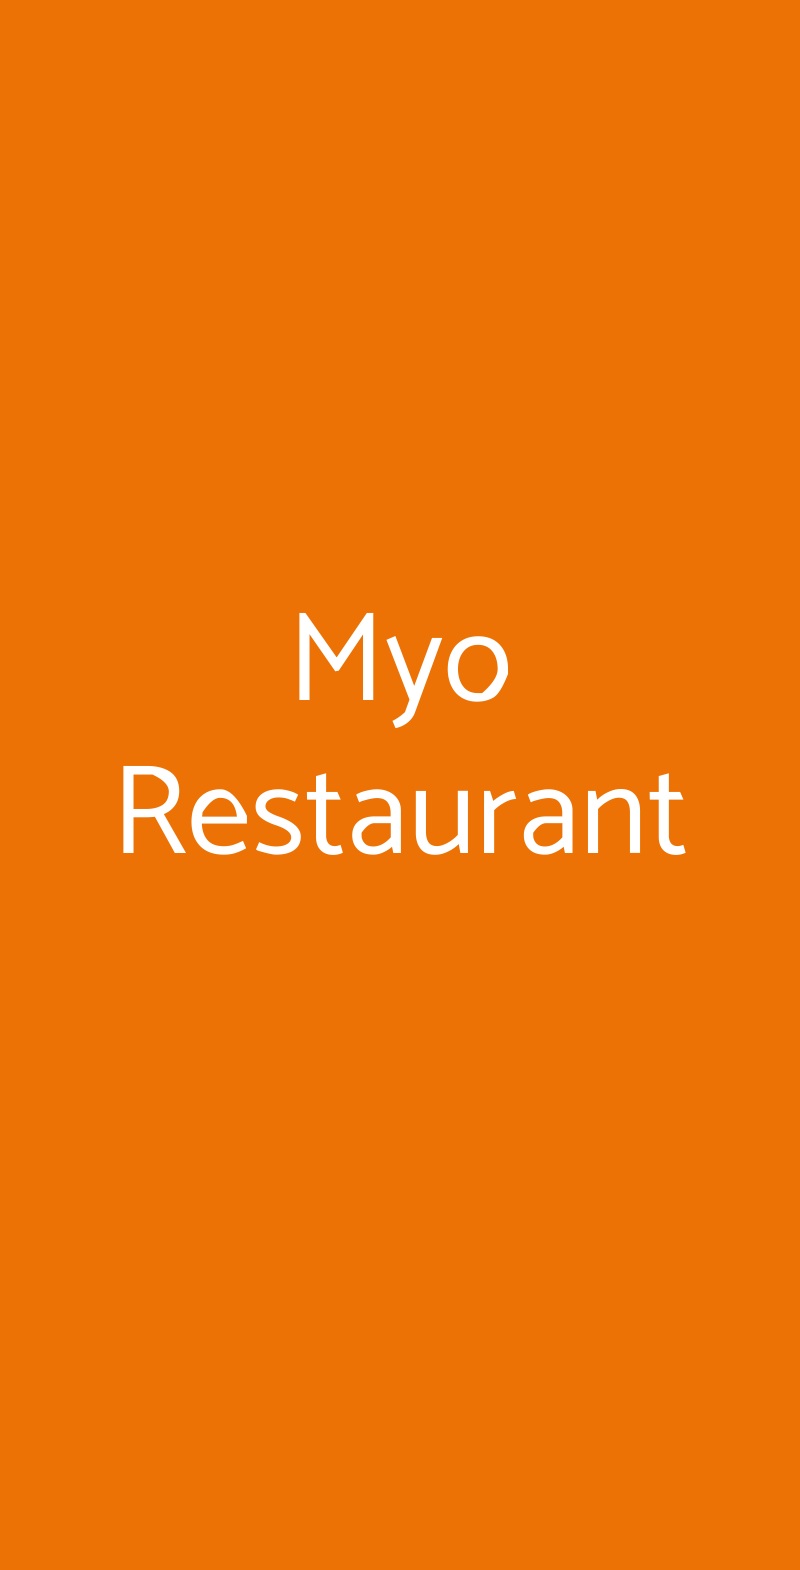 Myo Restaurant Milano menù 1 pagina